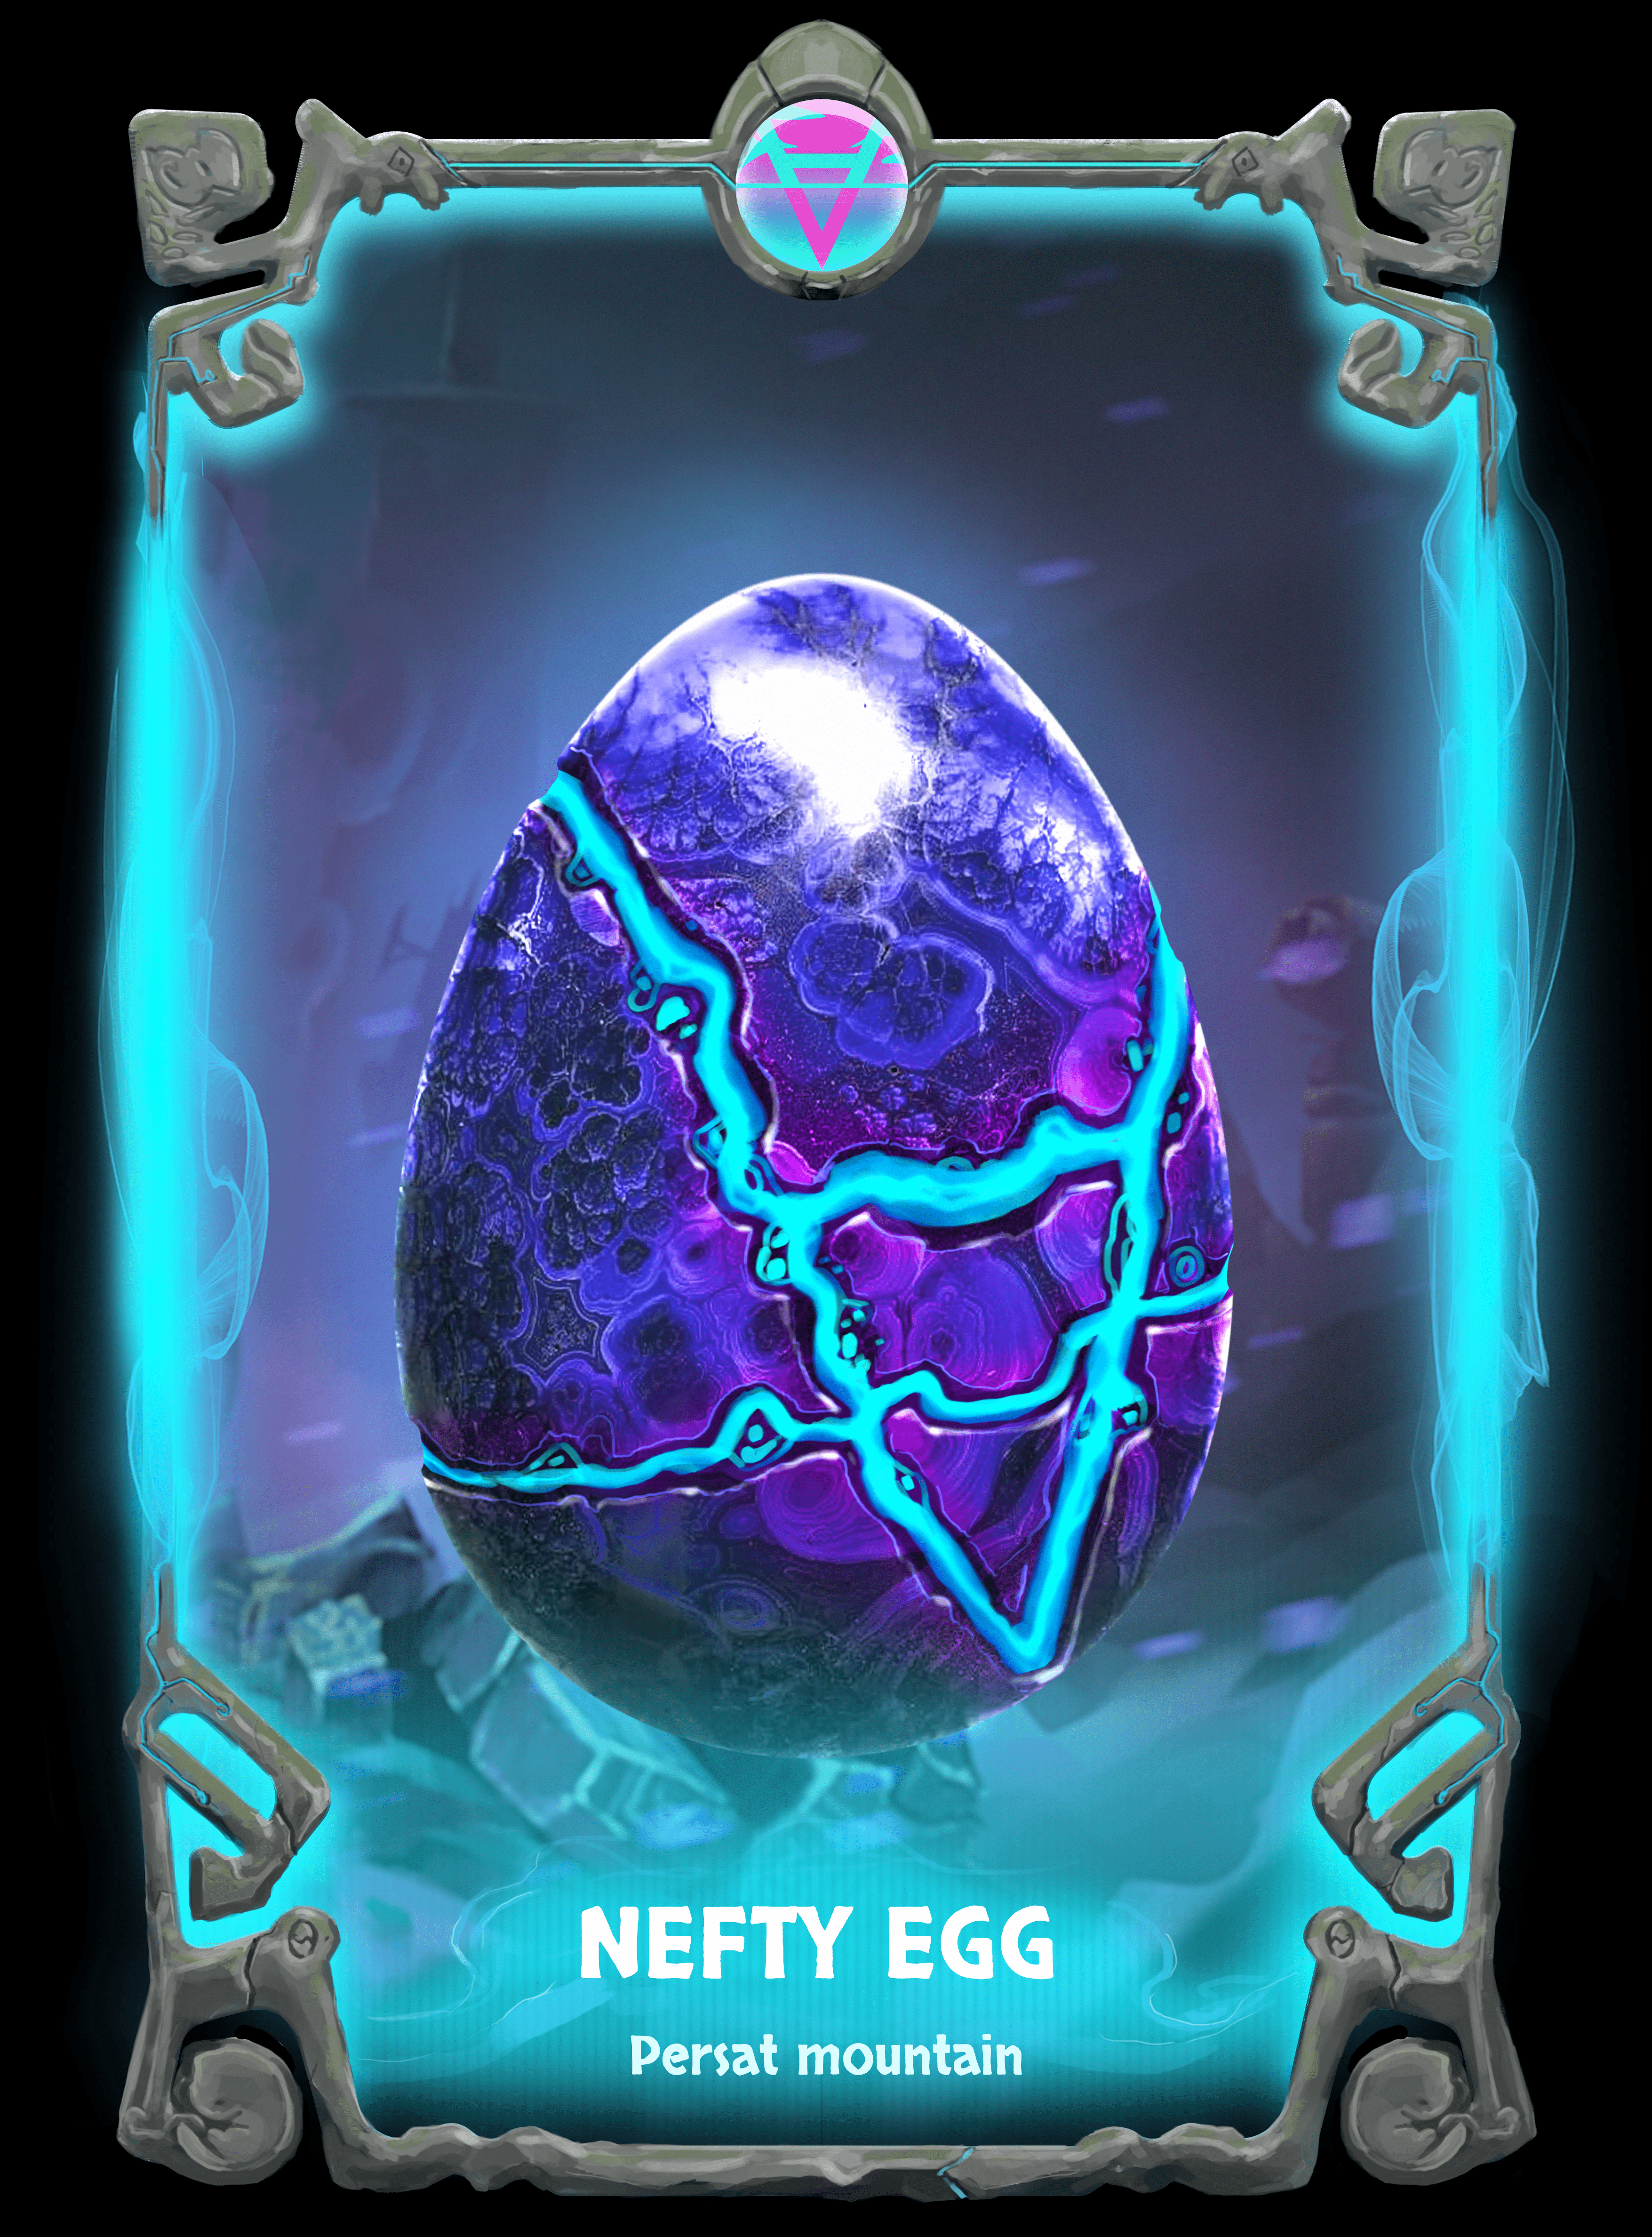 Nefty egg